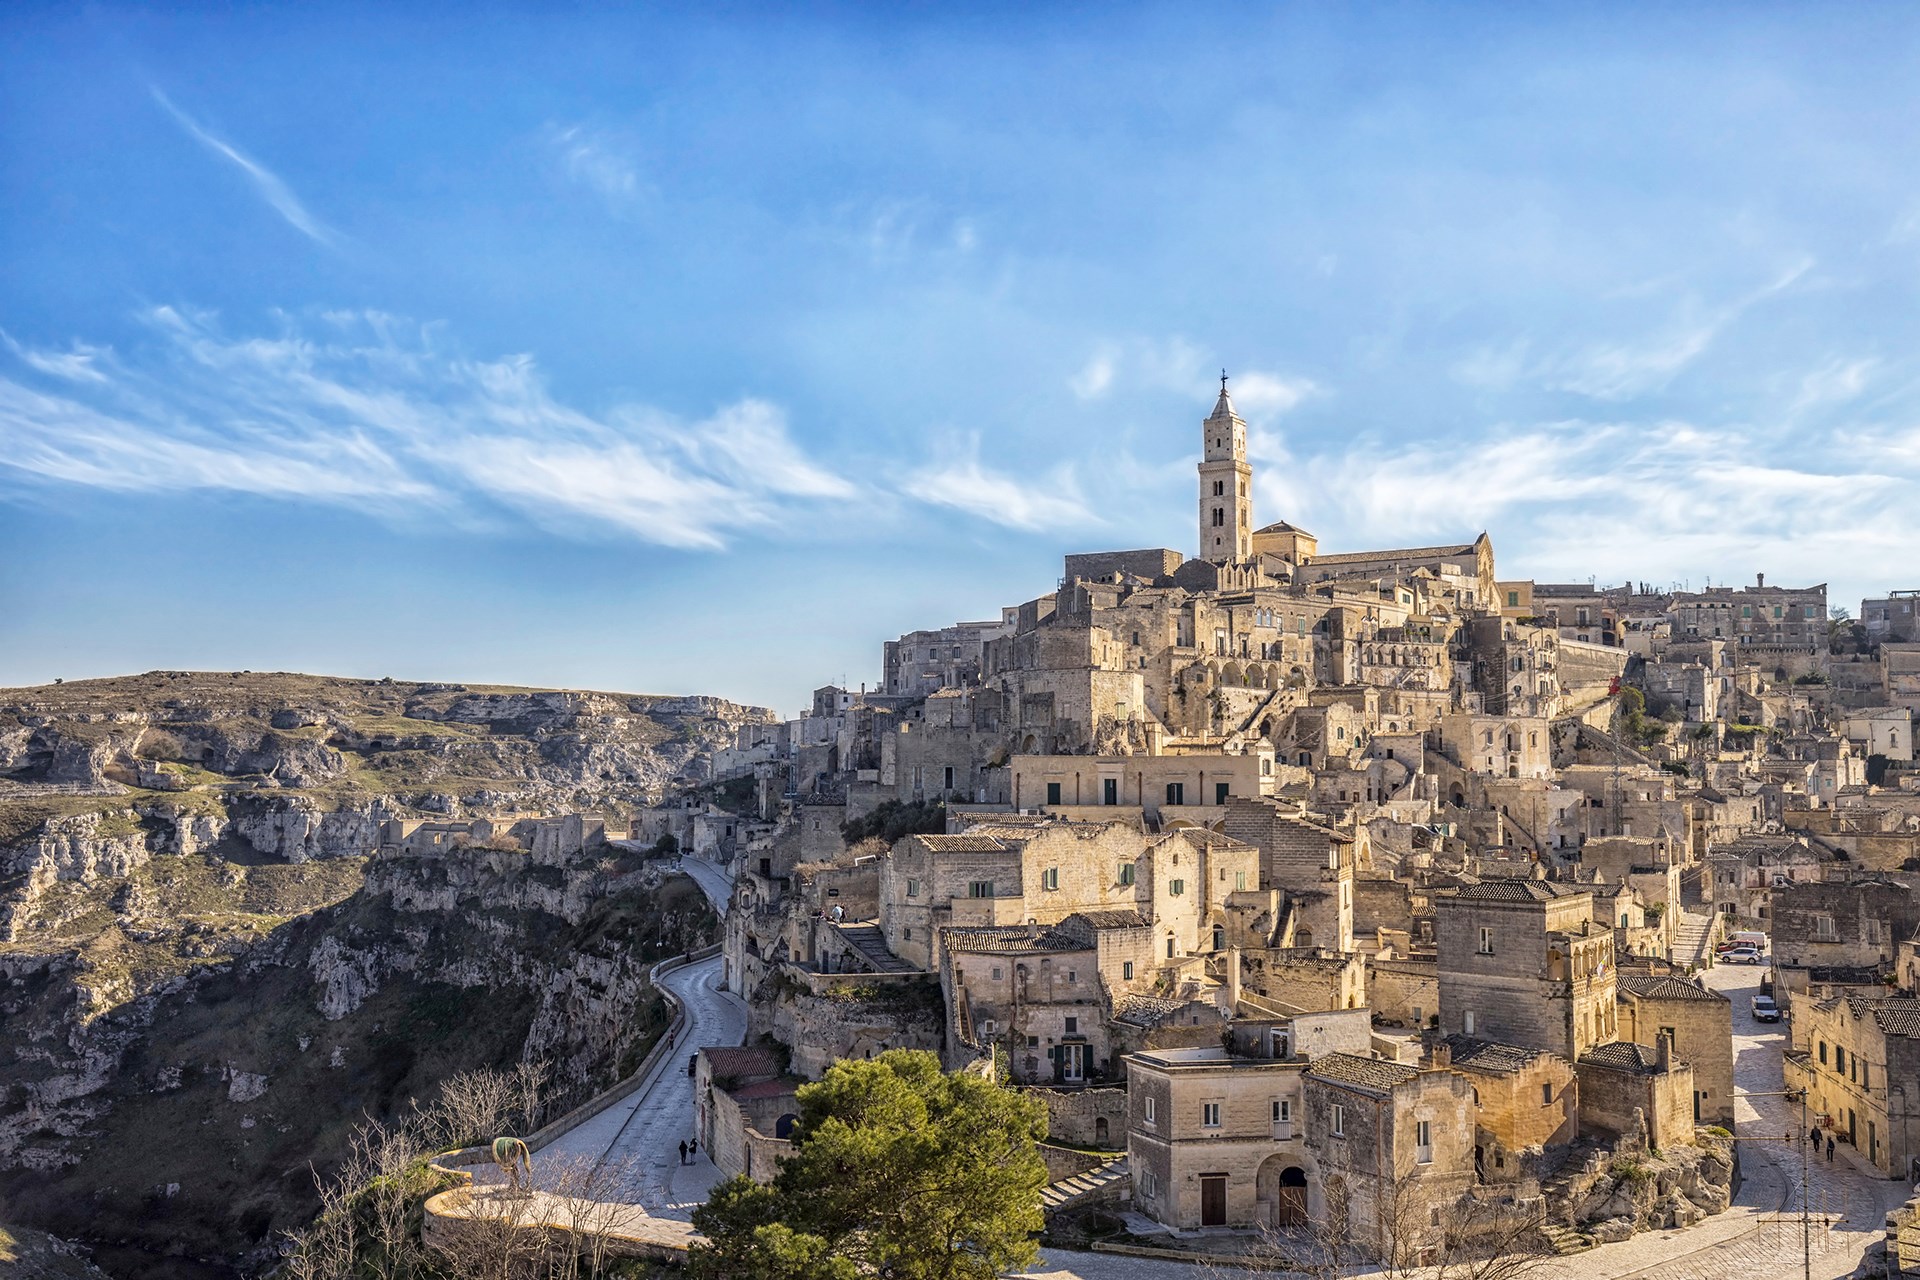 Matera: the Stone City